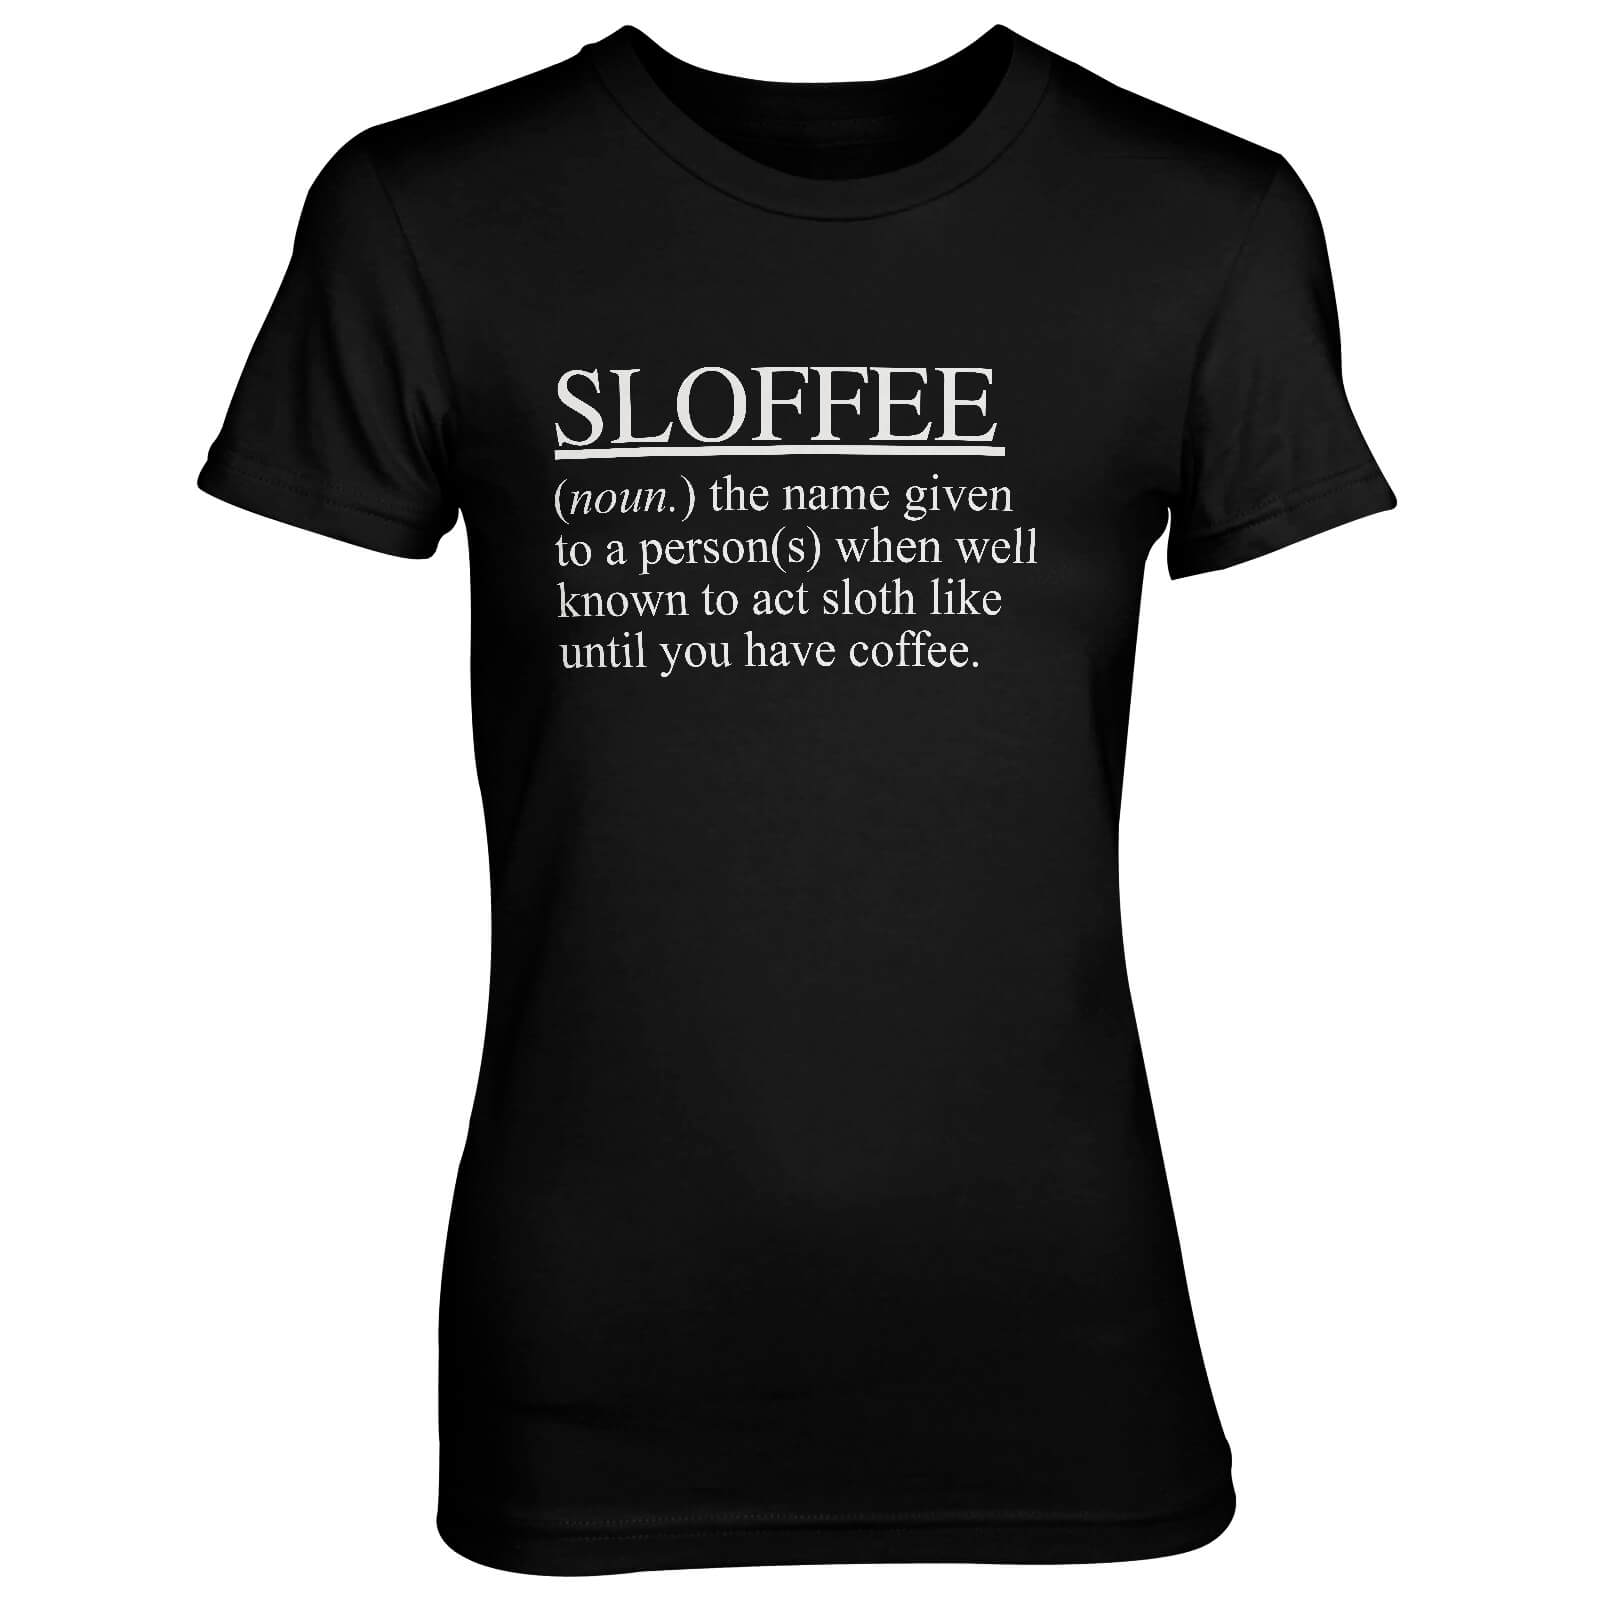 Sloffee Women's Black T-Shirt - S - Black